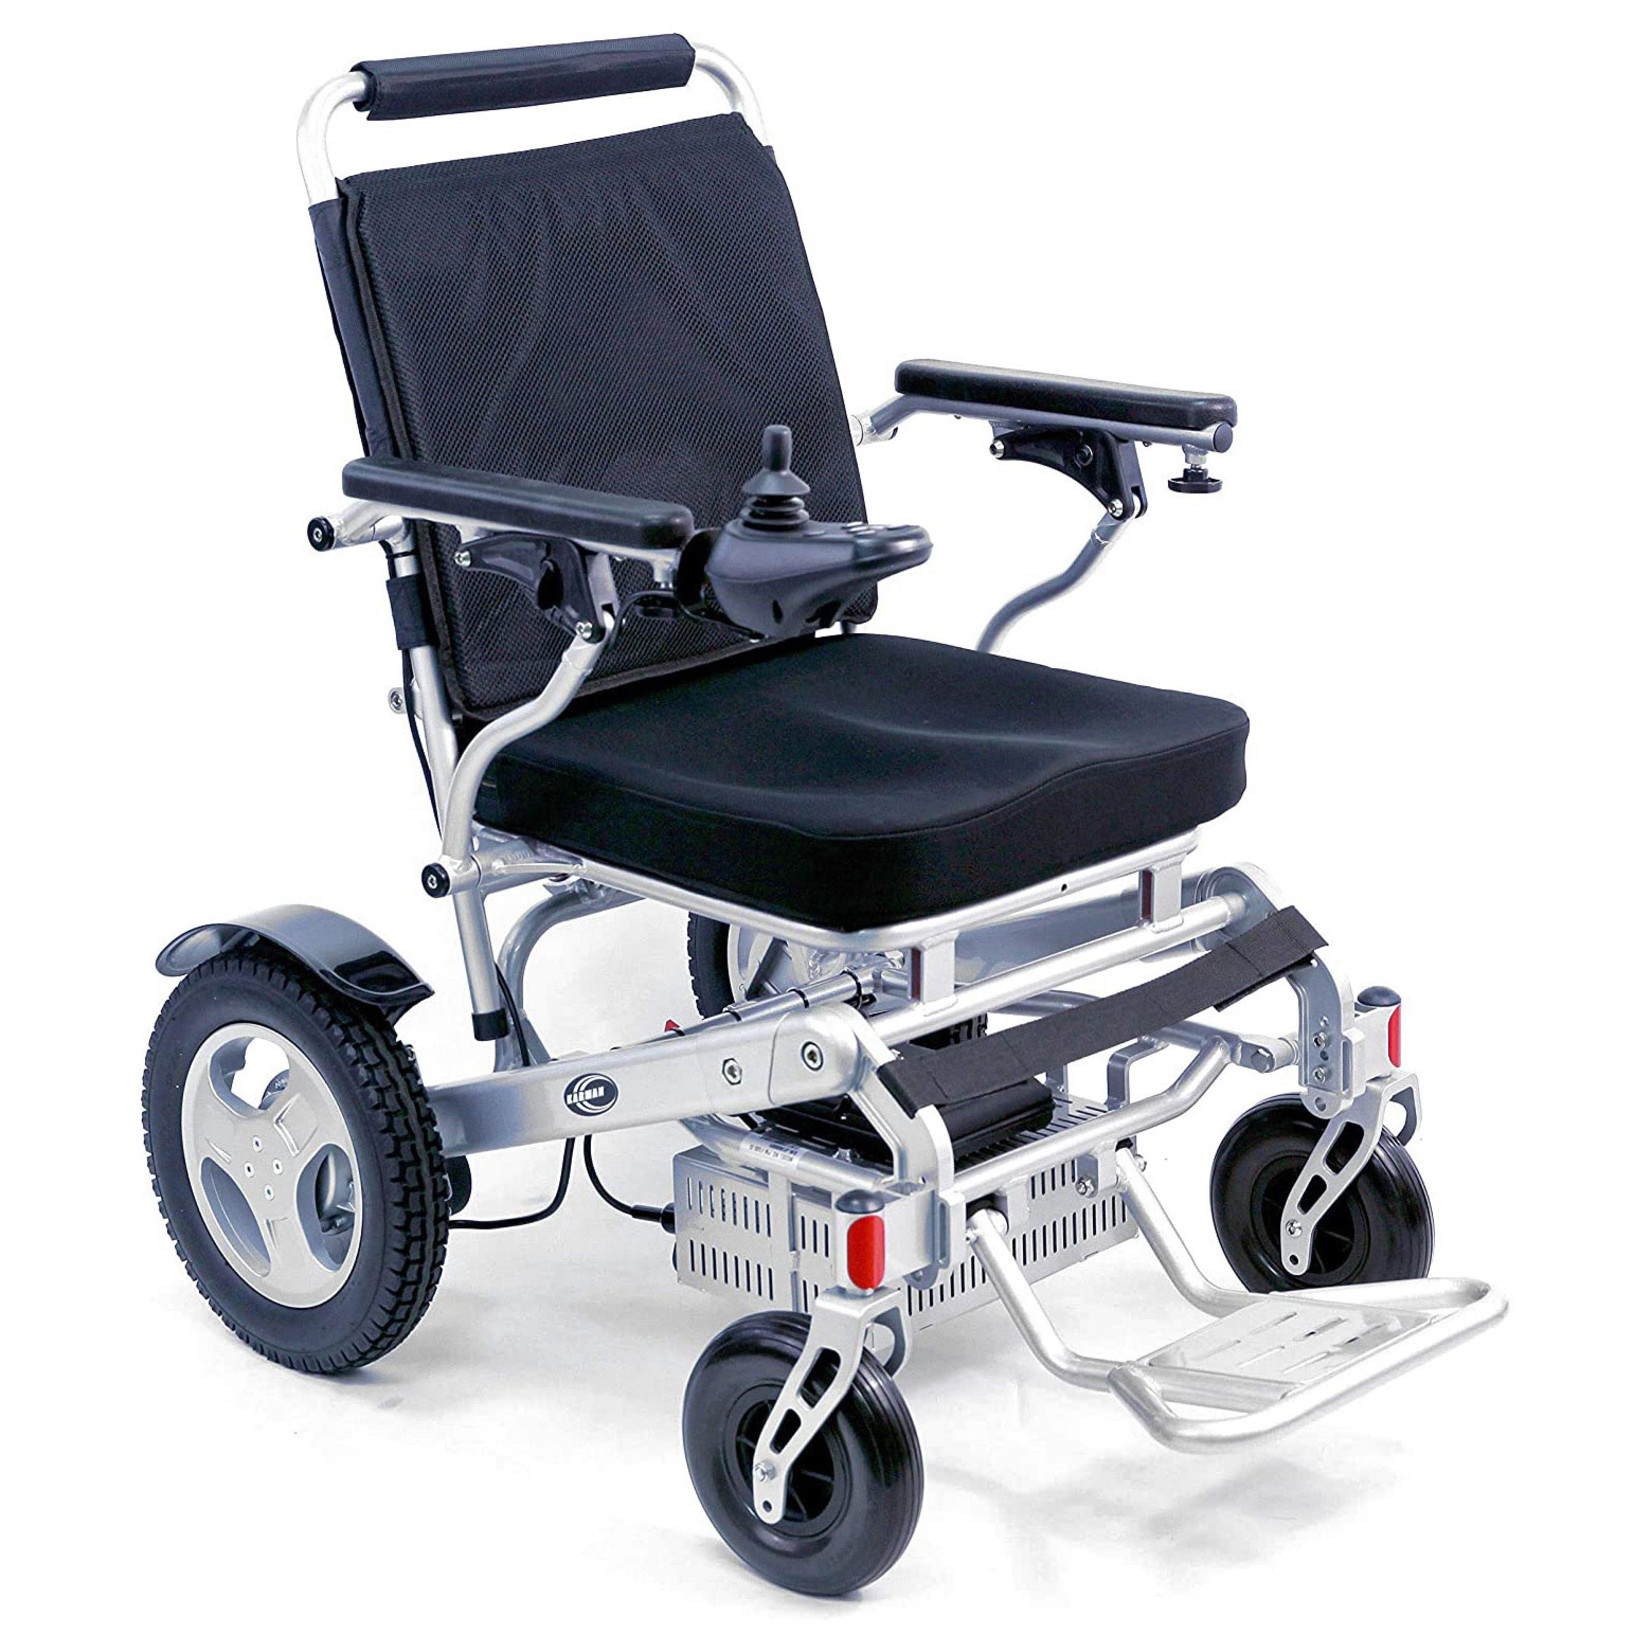 Karman Tranzit Go Foldable Lightweight Power Wheelchair